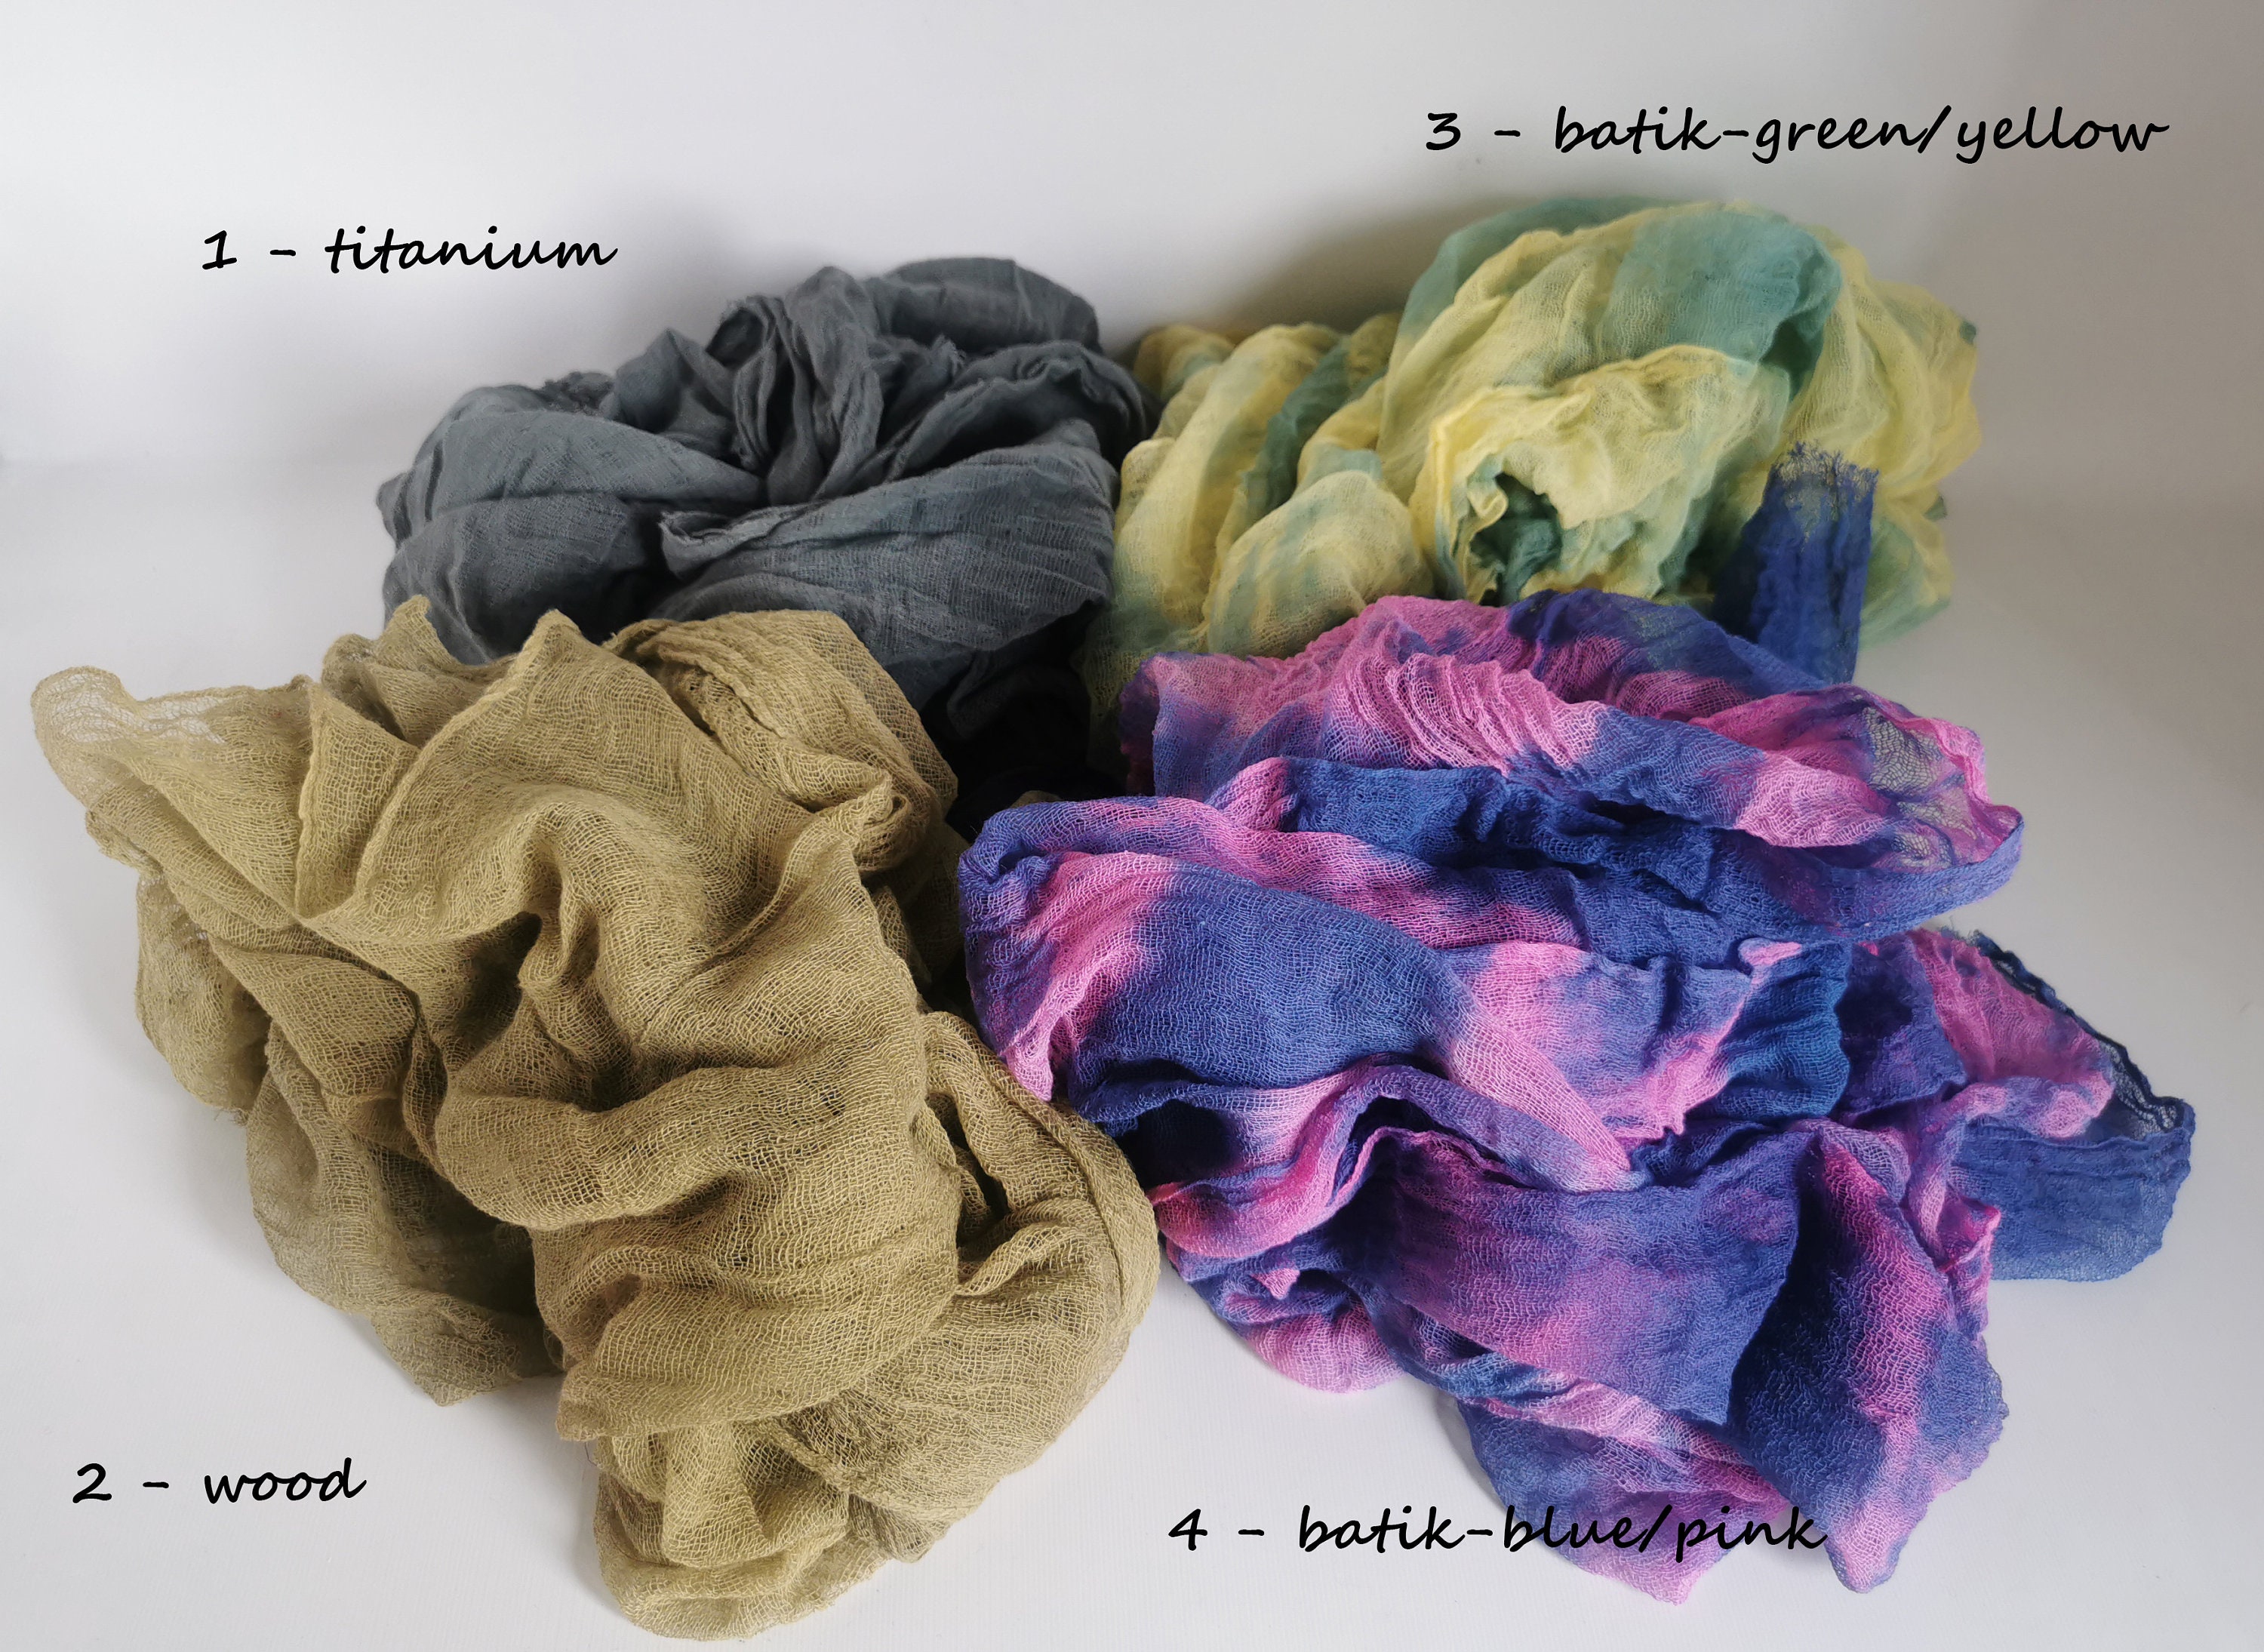 Cotton Scrim, Hand Dyed Gauze, Openweave Fabric, Dyed Butter Muslin, Nuno  Felting, UK Seller, Colour No.07 Yellow Ochre 